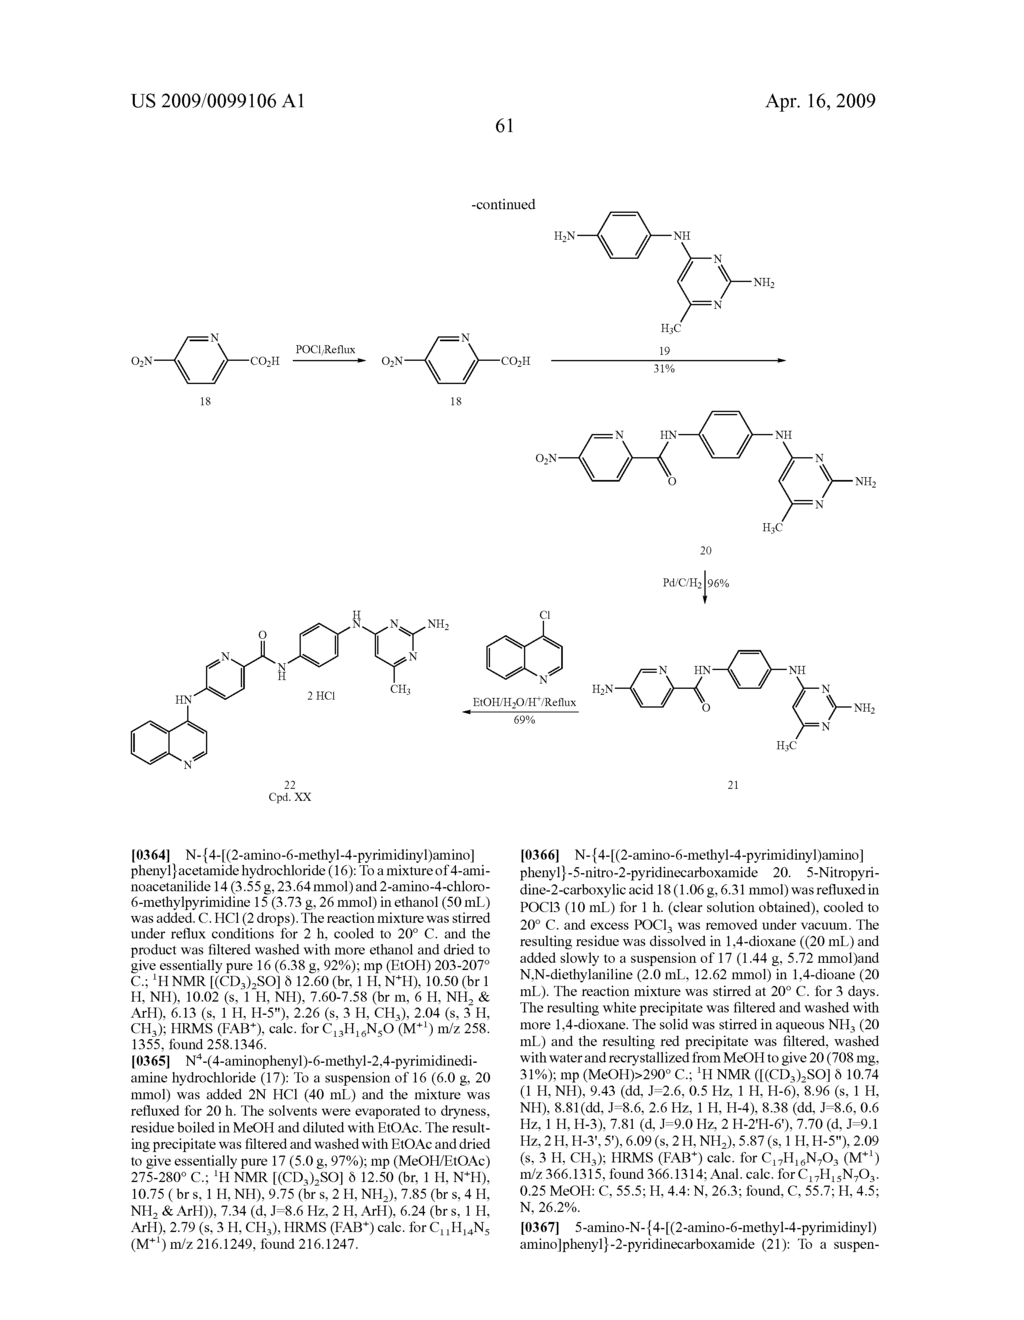 QUINOLINE DERIVATIVES FOR MODULATING DNA METHYLATION - diagram, schematic, and image 63